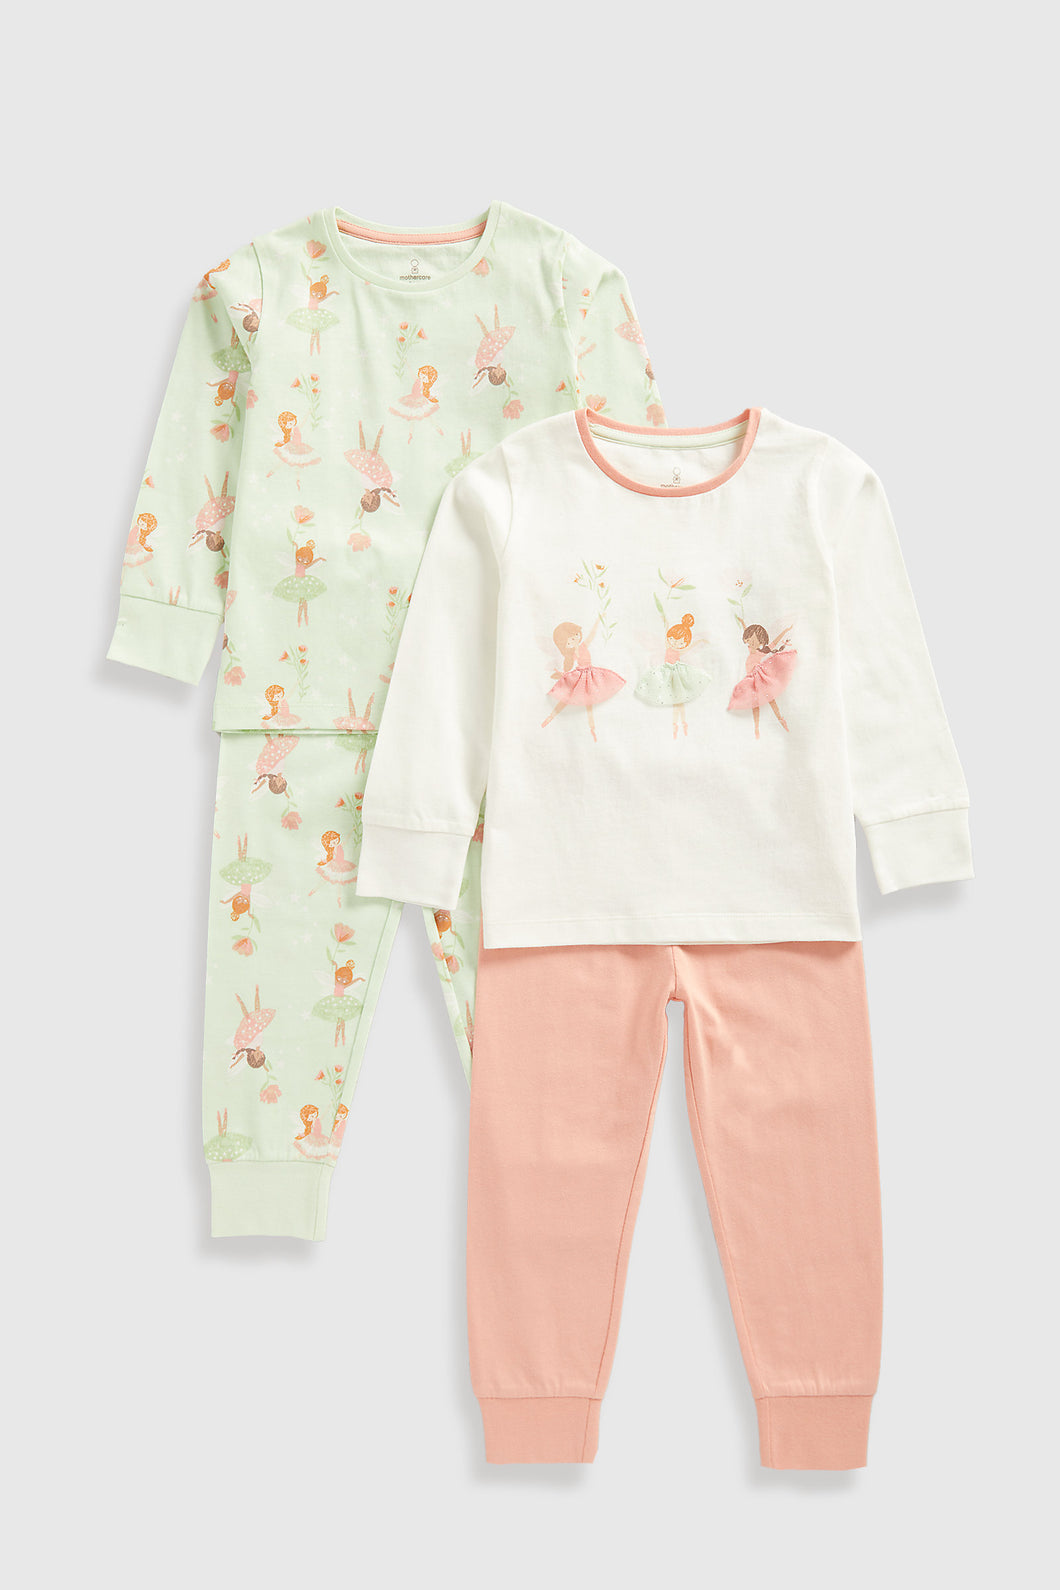 Mothercare Flower Fairy Pyjamas - 2 Pack